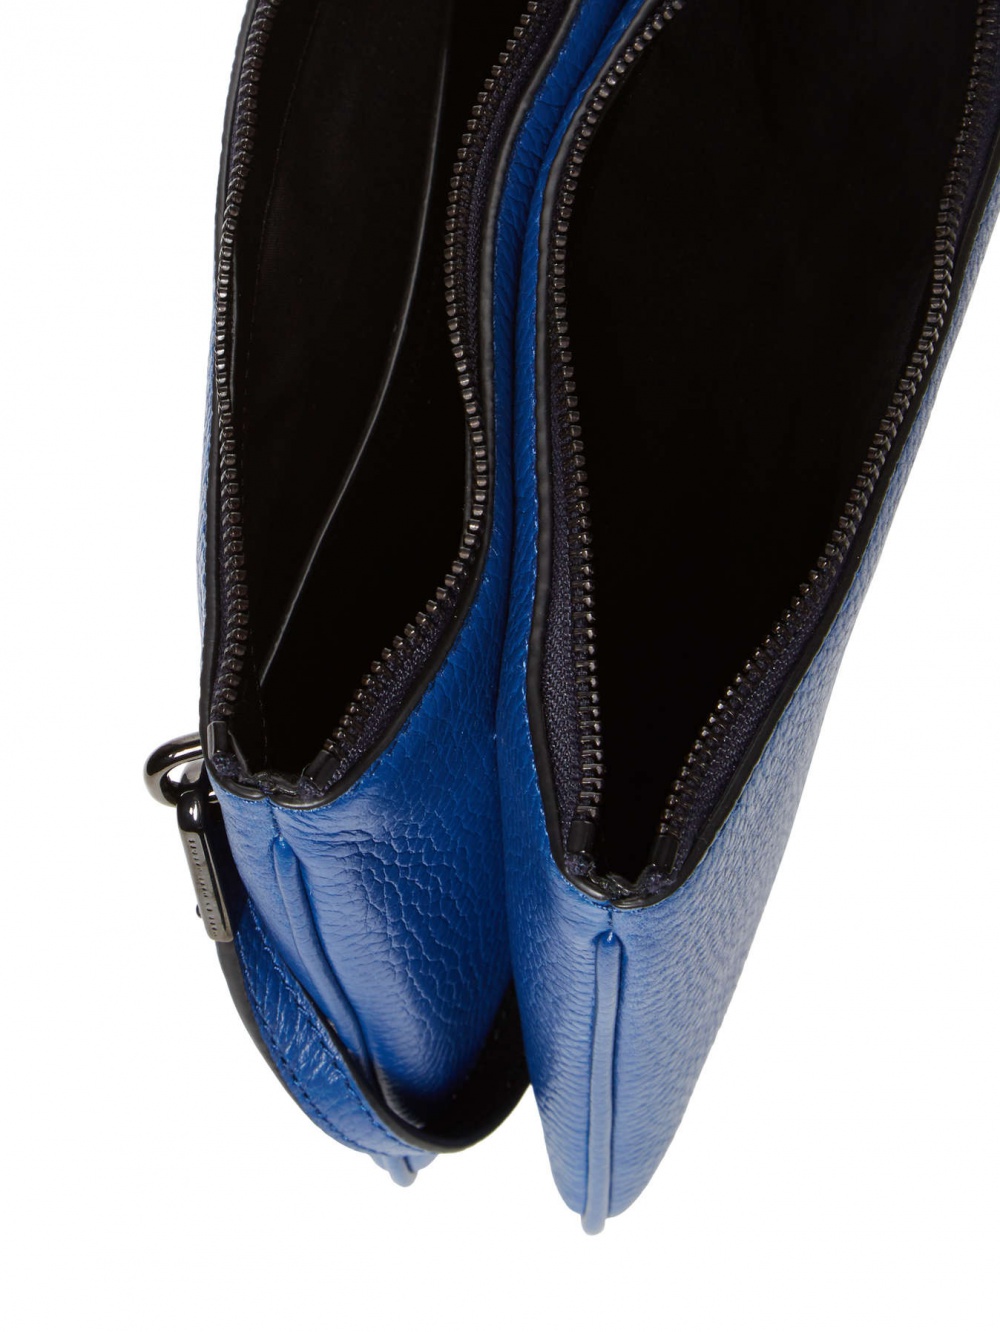 Сумка кроссбоди Marc by Marc Jacobs, модель Ligero Double Percy Leather Crossbody, синяя